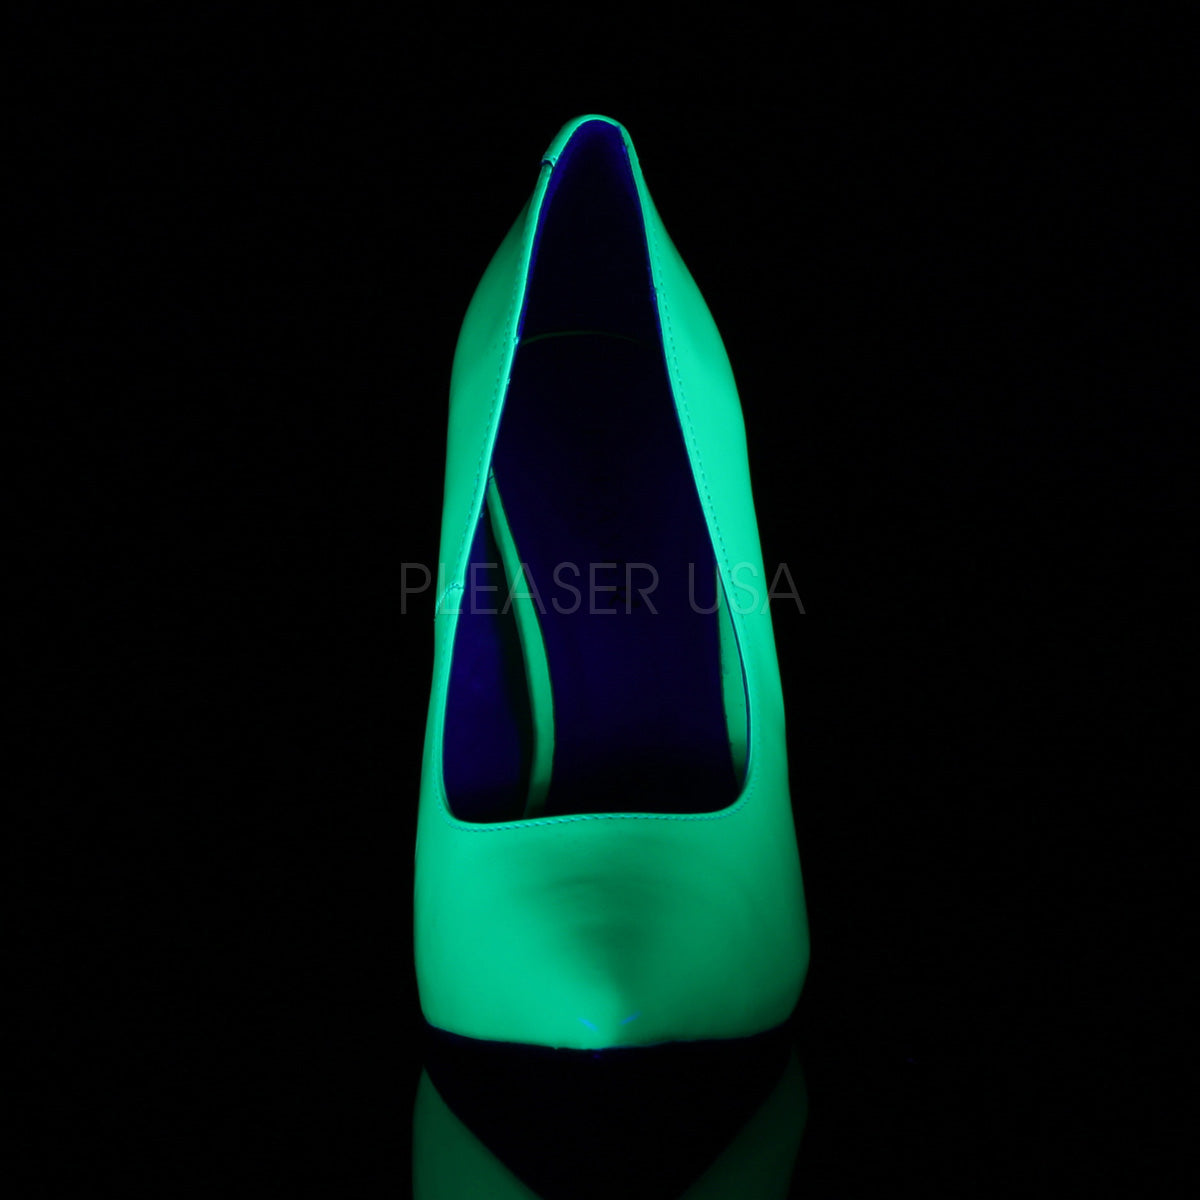 Neon Green Classic Stilettos Amuse-20